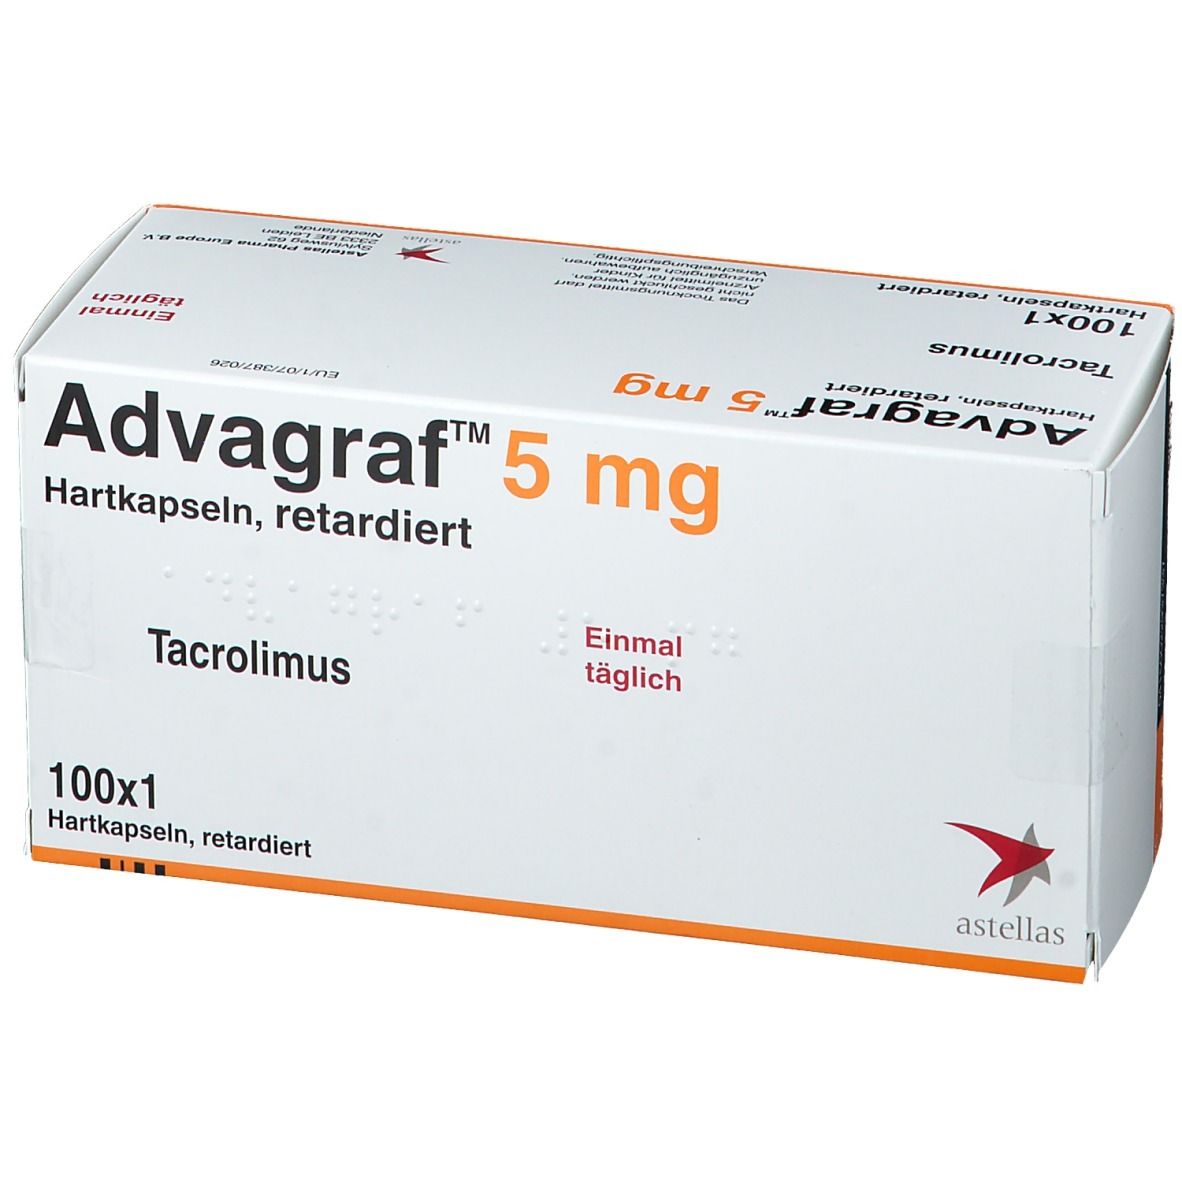 Advagraf® 5 mg